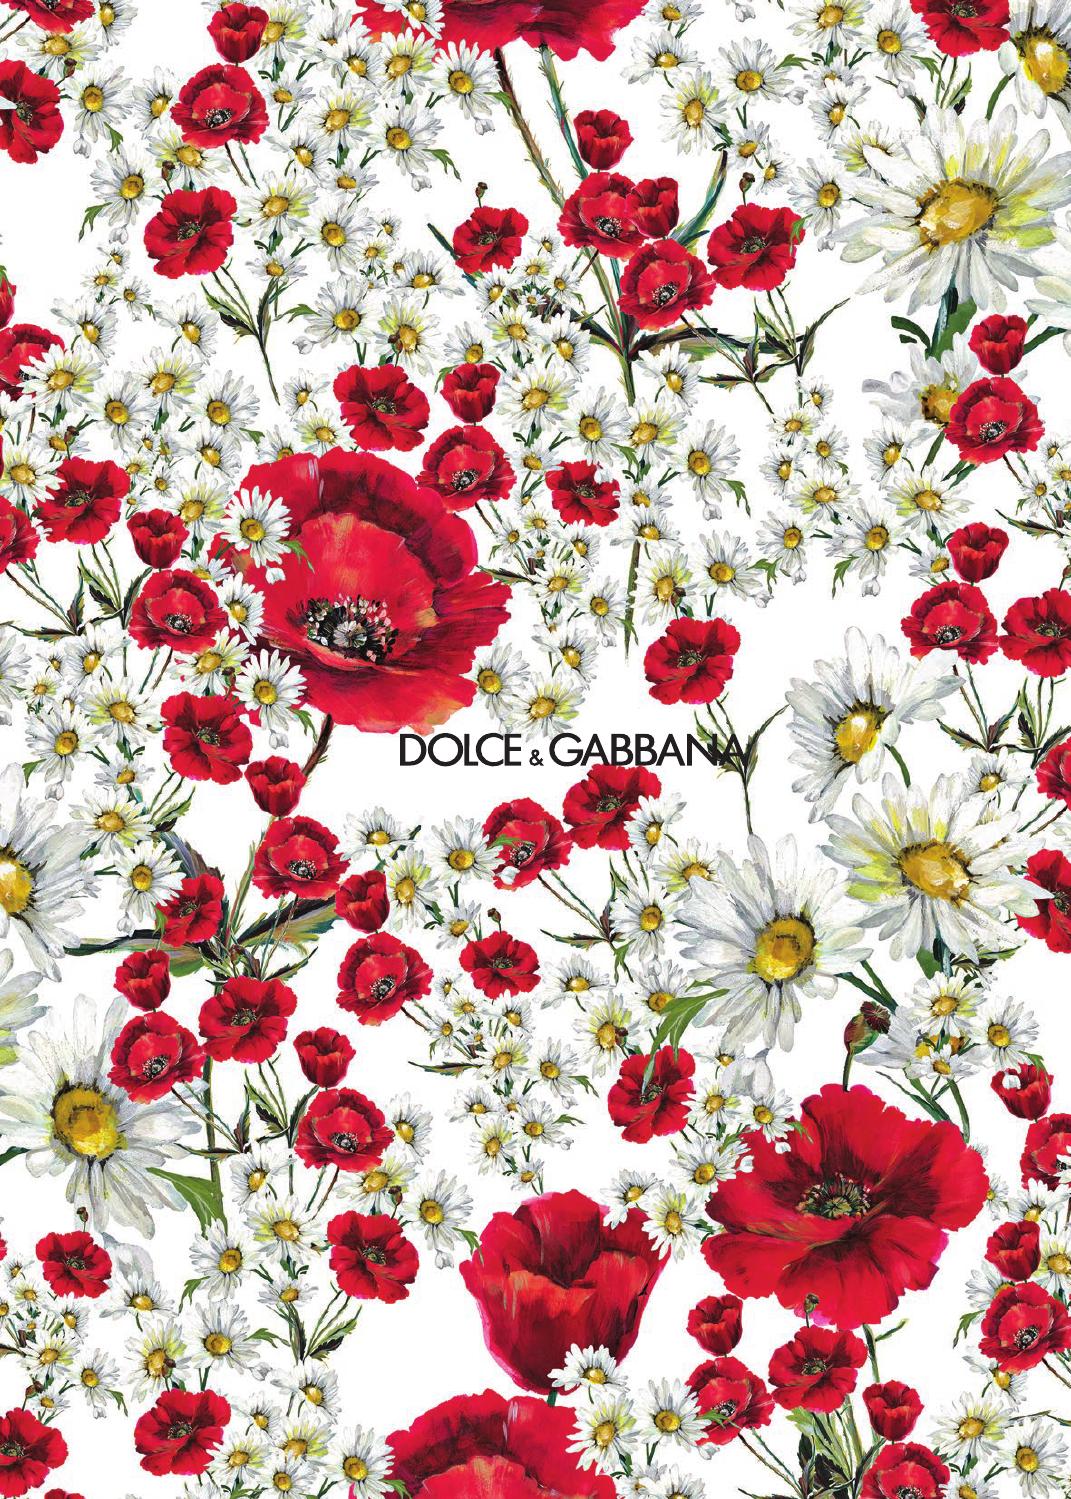 dolce and gabbana wallpaper,flower,red,plant,petal,cut flowers